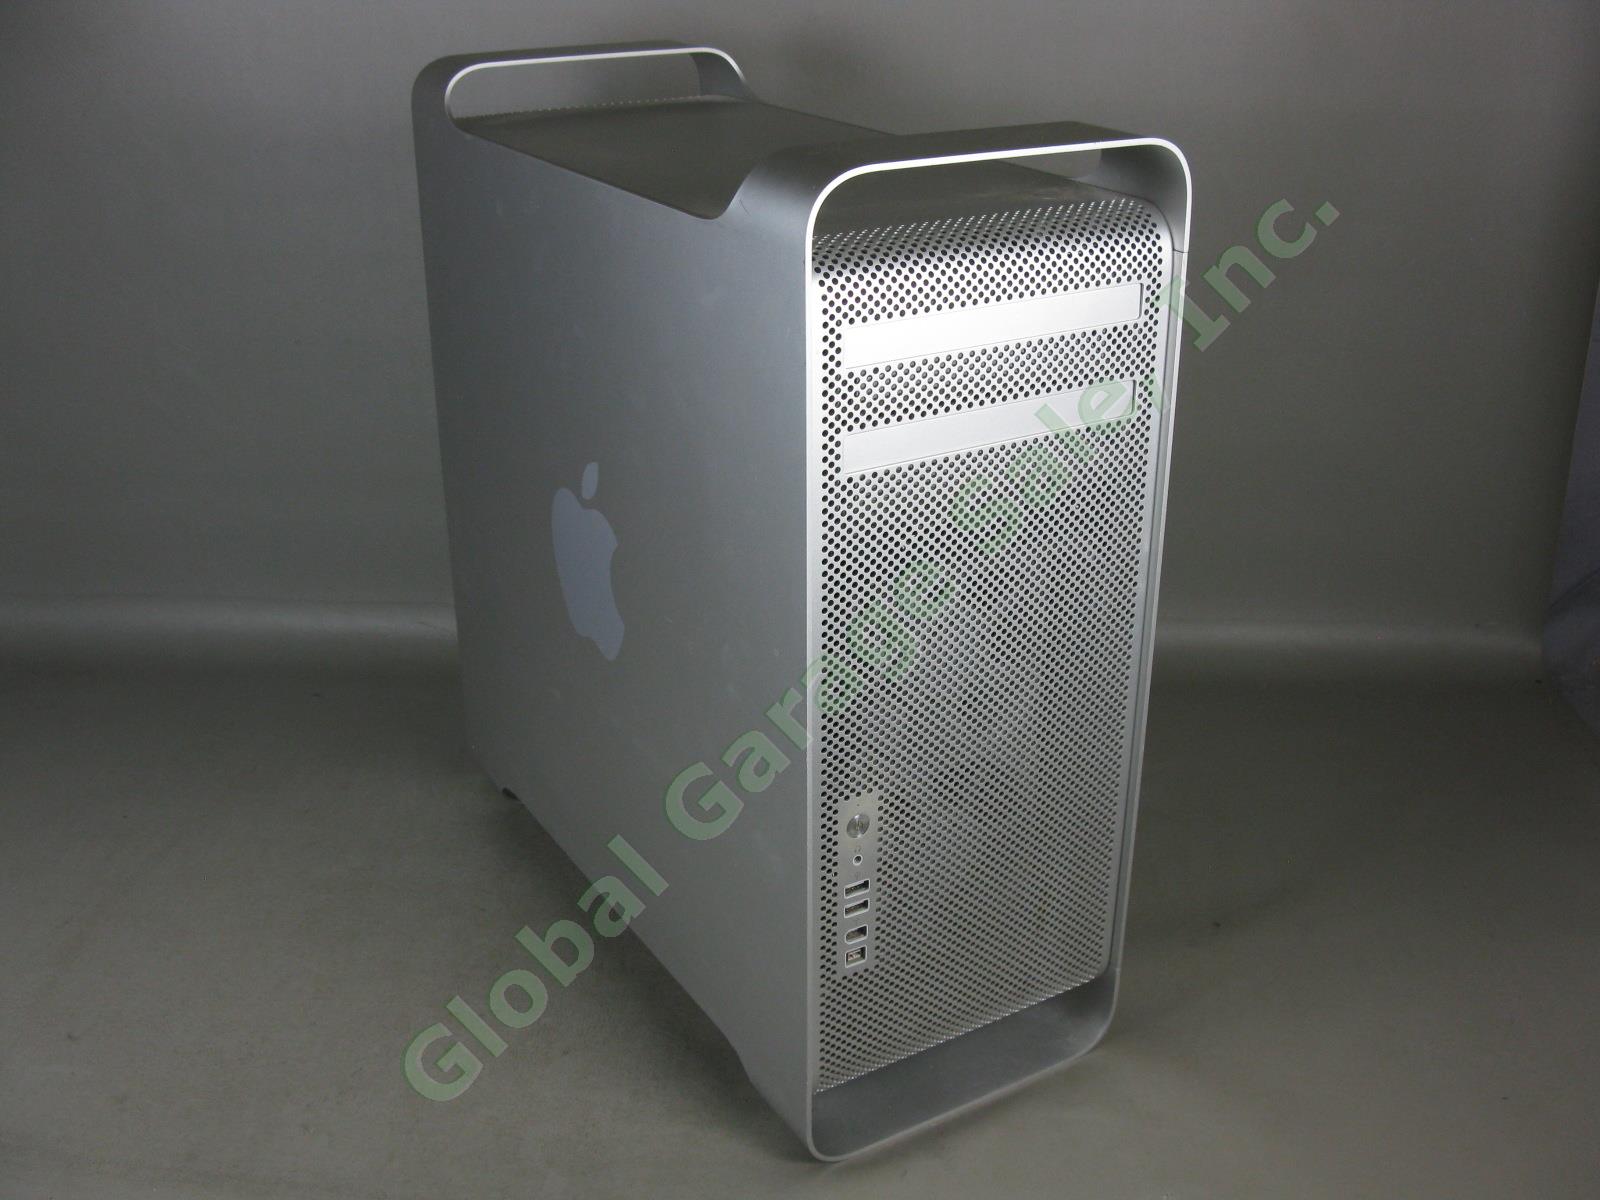 Apple Mac Pro A1186 Desktop Computer 7GB RAM 160GB HDD 2GHz Dual Core Xeon 10.6 3